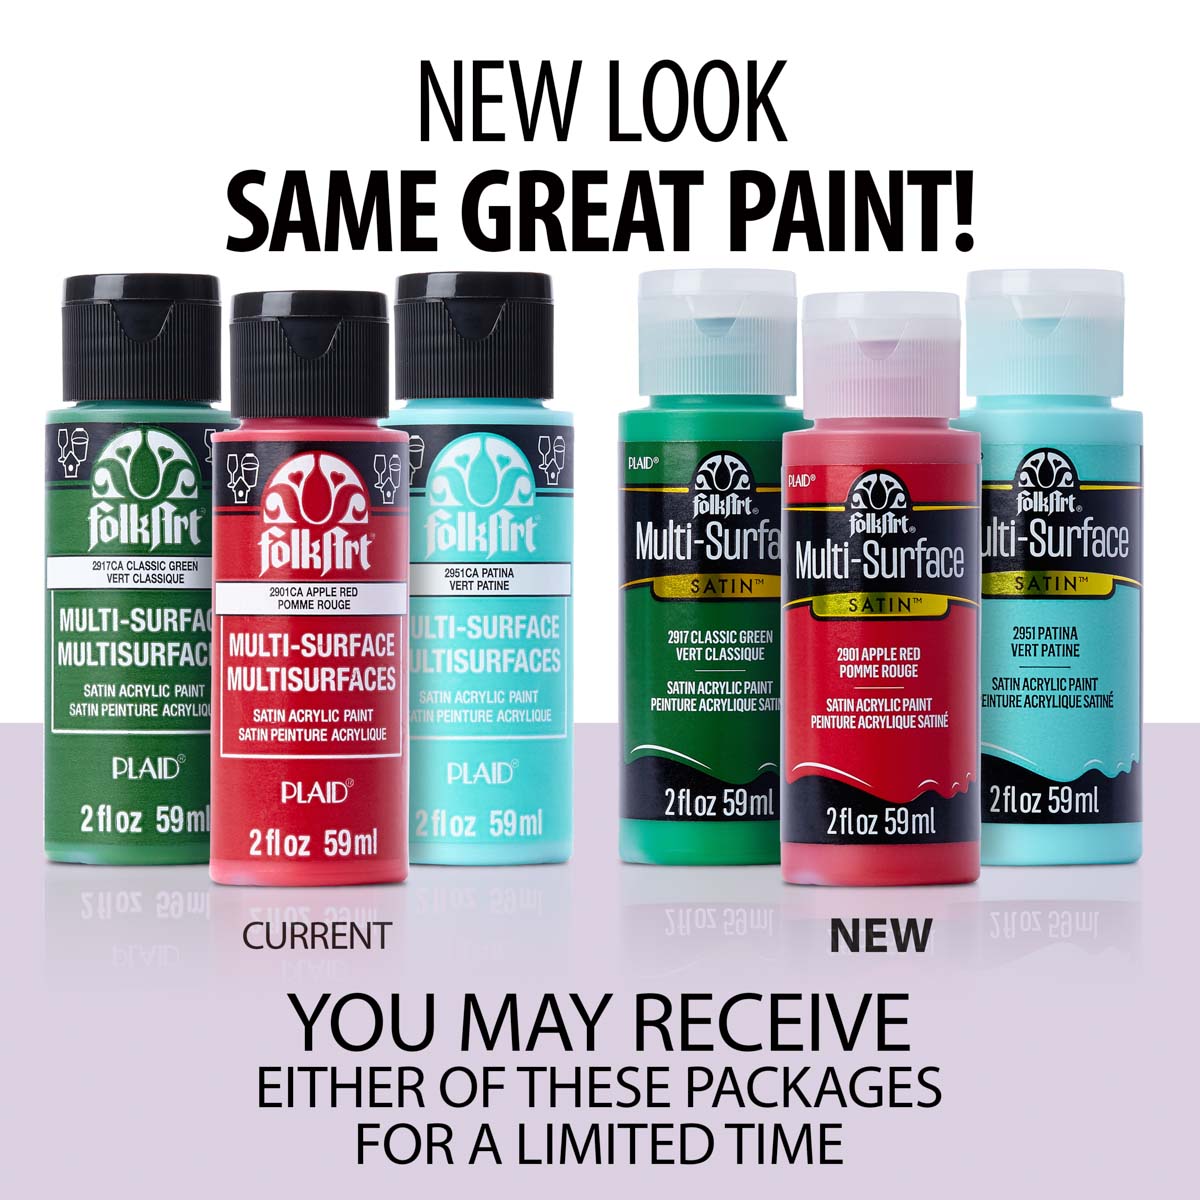 FolkArt ® Multi-Surface Satin Acrylic Paints - Pink Melon, 2 oz. - 2897